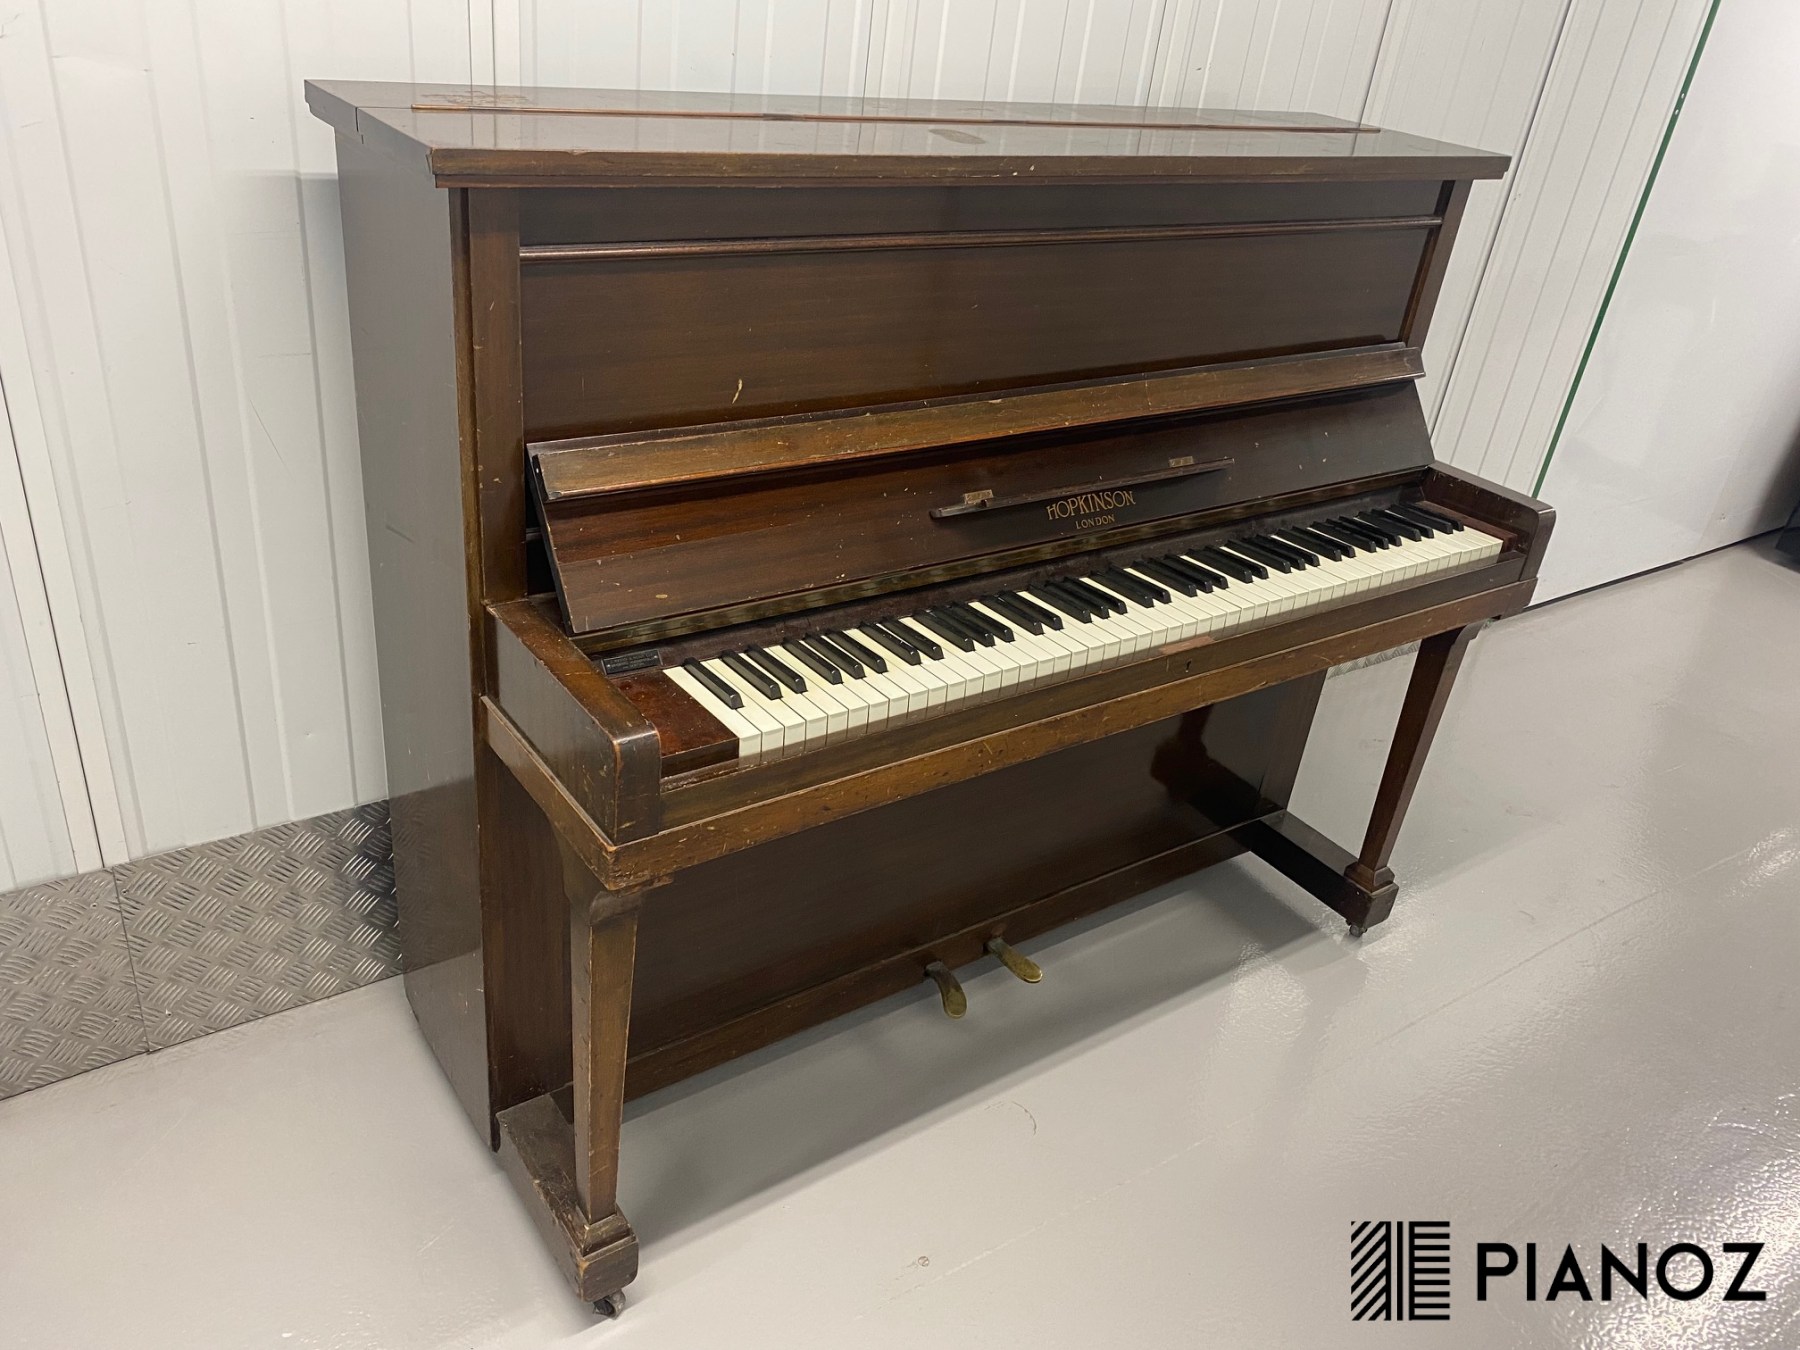 Hopkinson Traditional Upright Piano piano for sale in UK